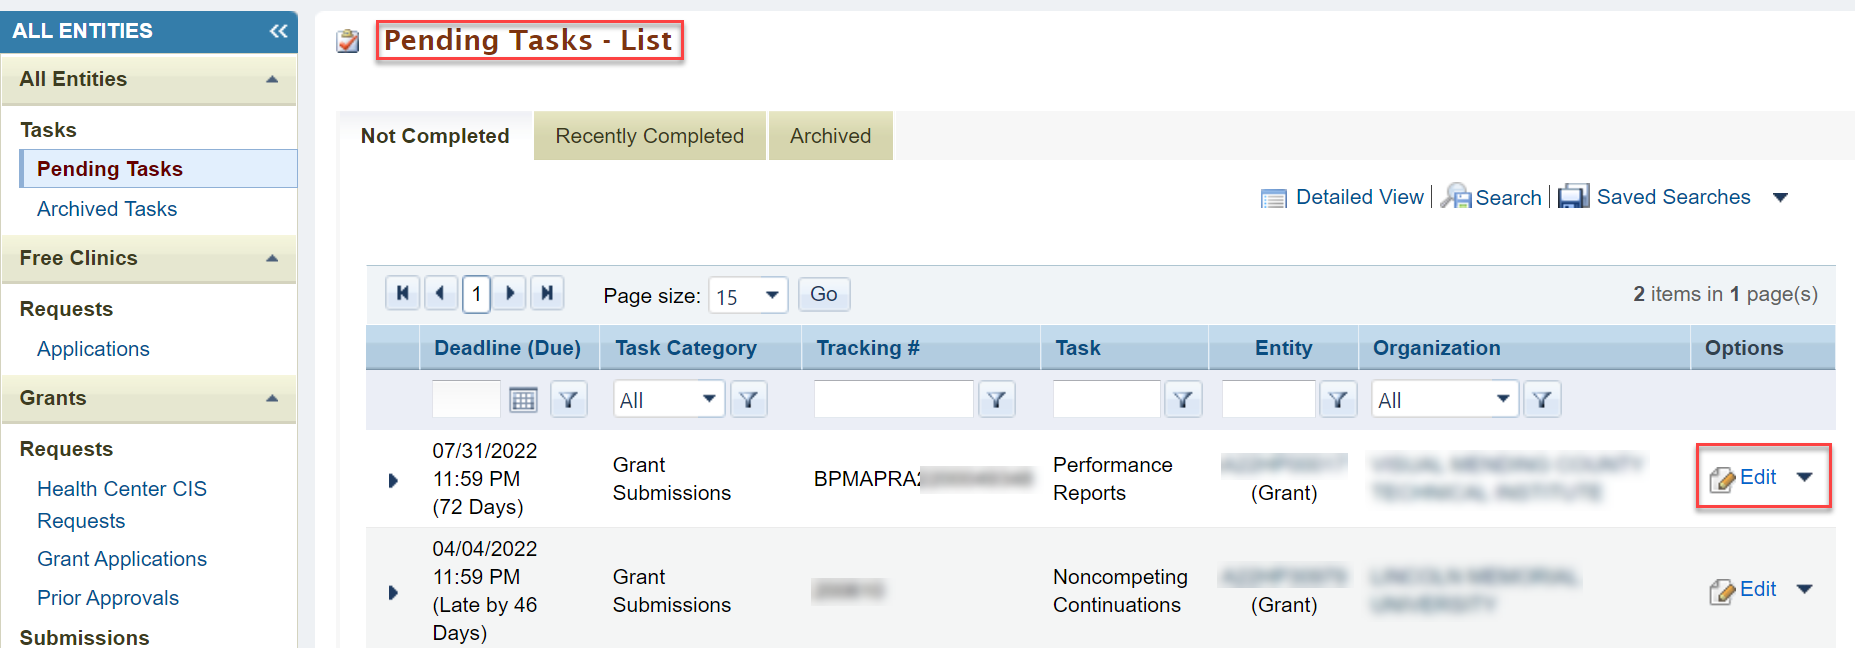 Screenshot of the Pending Tasks lists highlighting the BPMH Performance Report Edit option